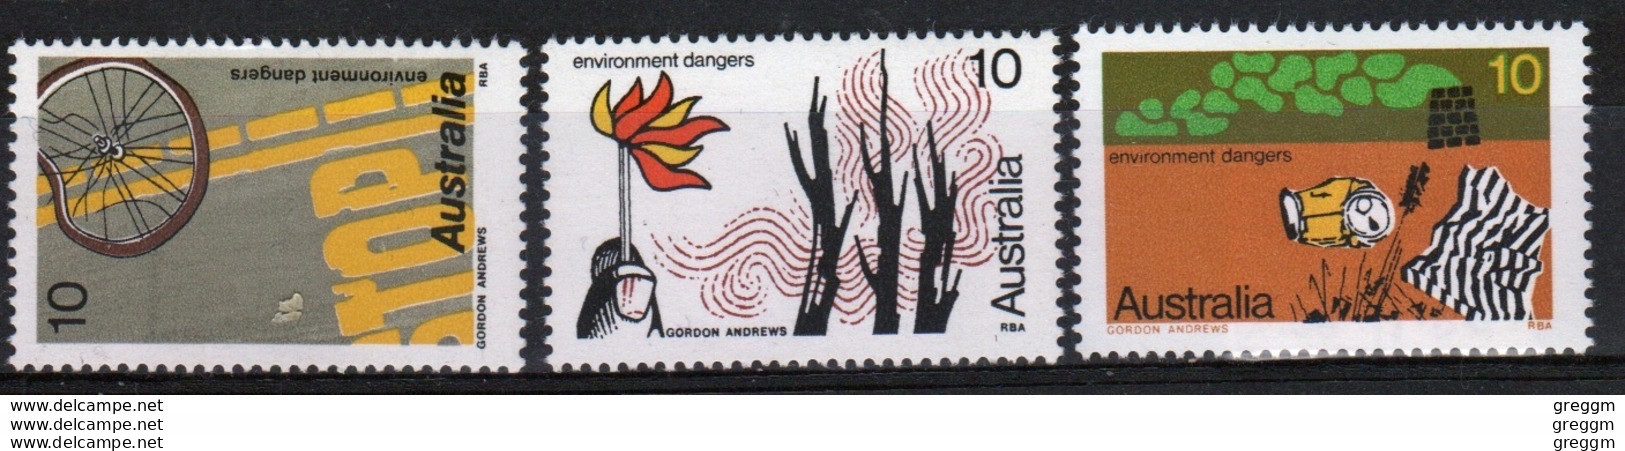 Australia 1975 Queen Elizabeth Set Of Stamps To Environment Dangers. - Mint Stamps